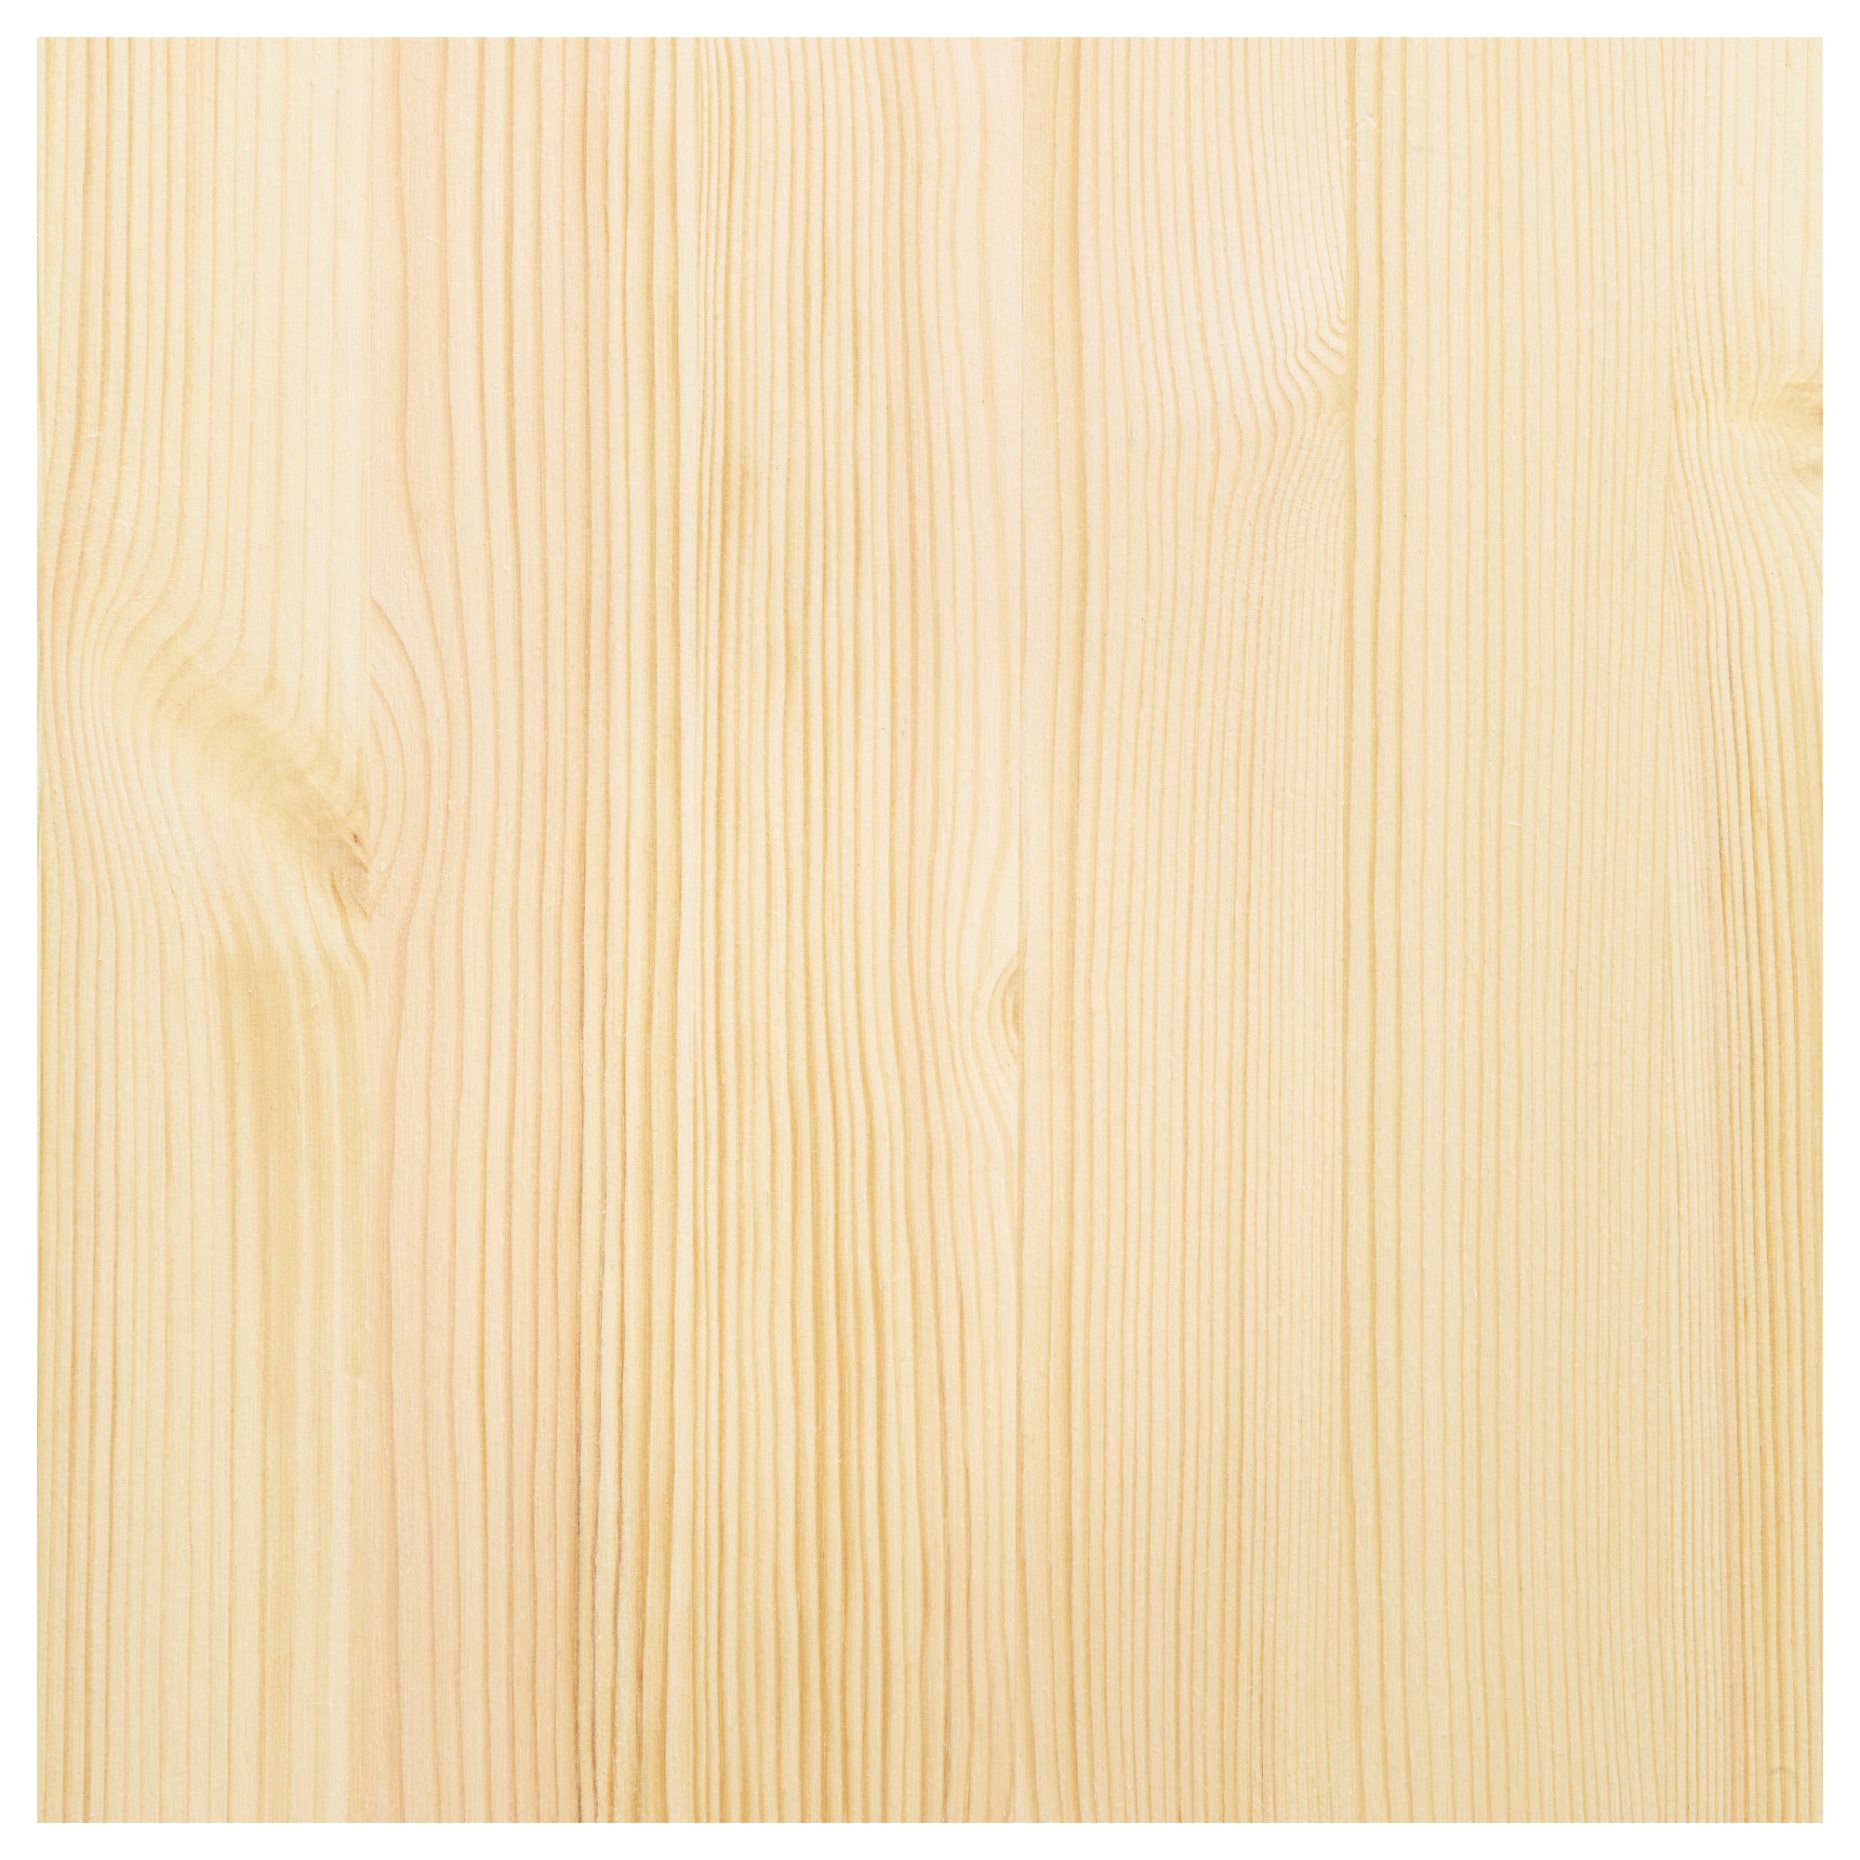 VARDA, wood stain, outdoor use, 203.331.02